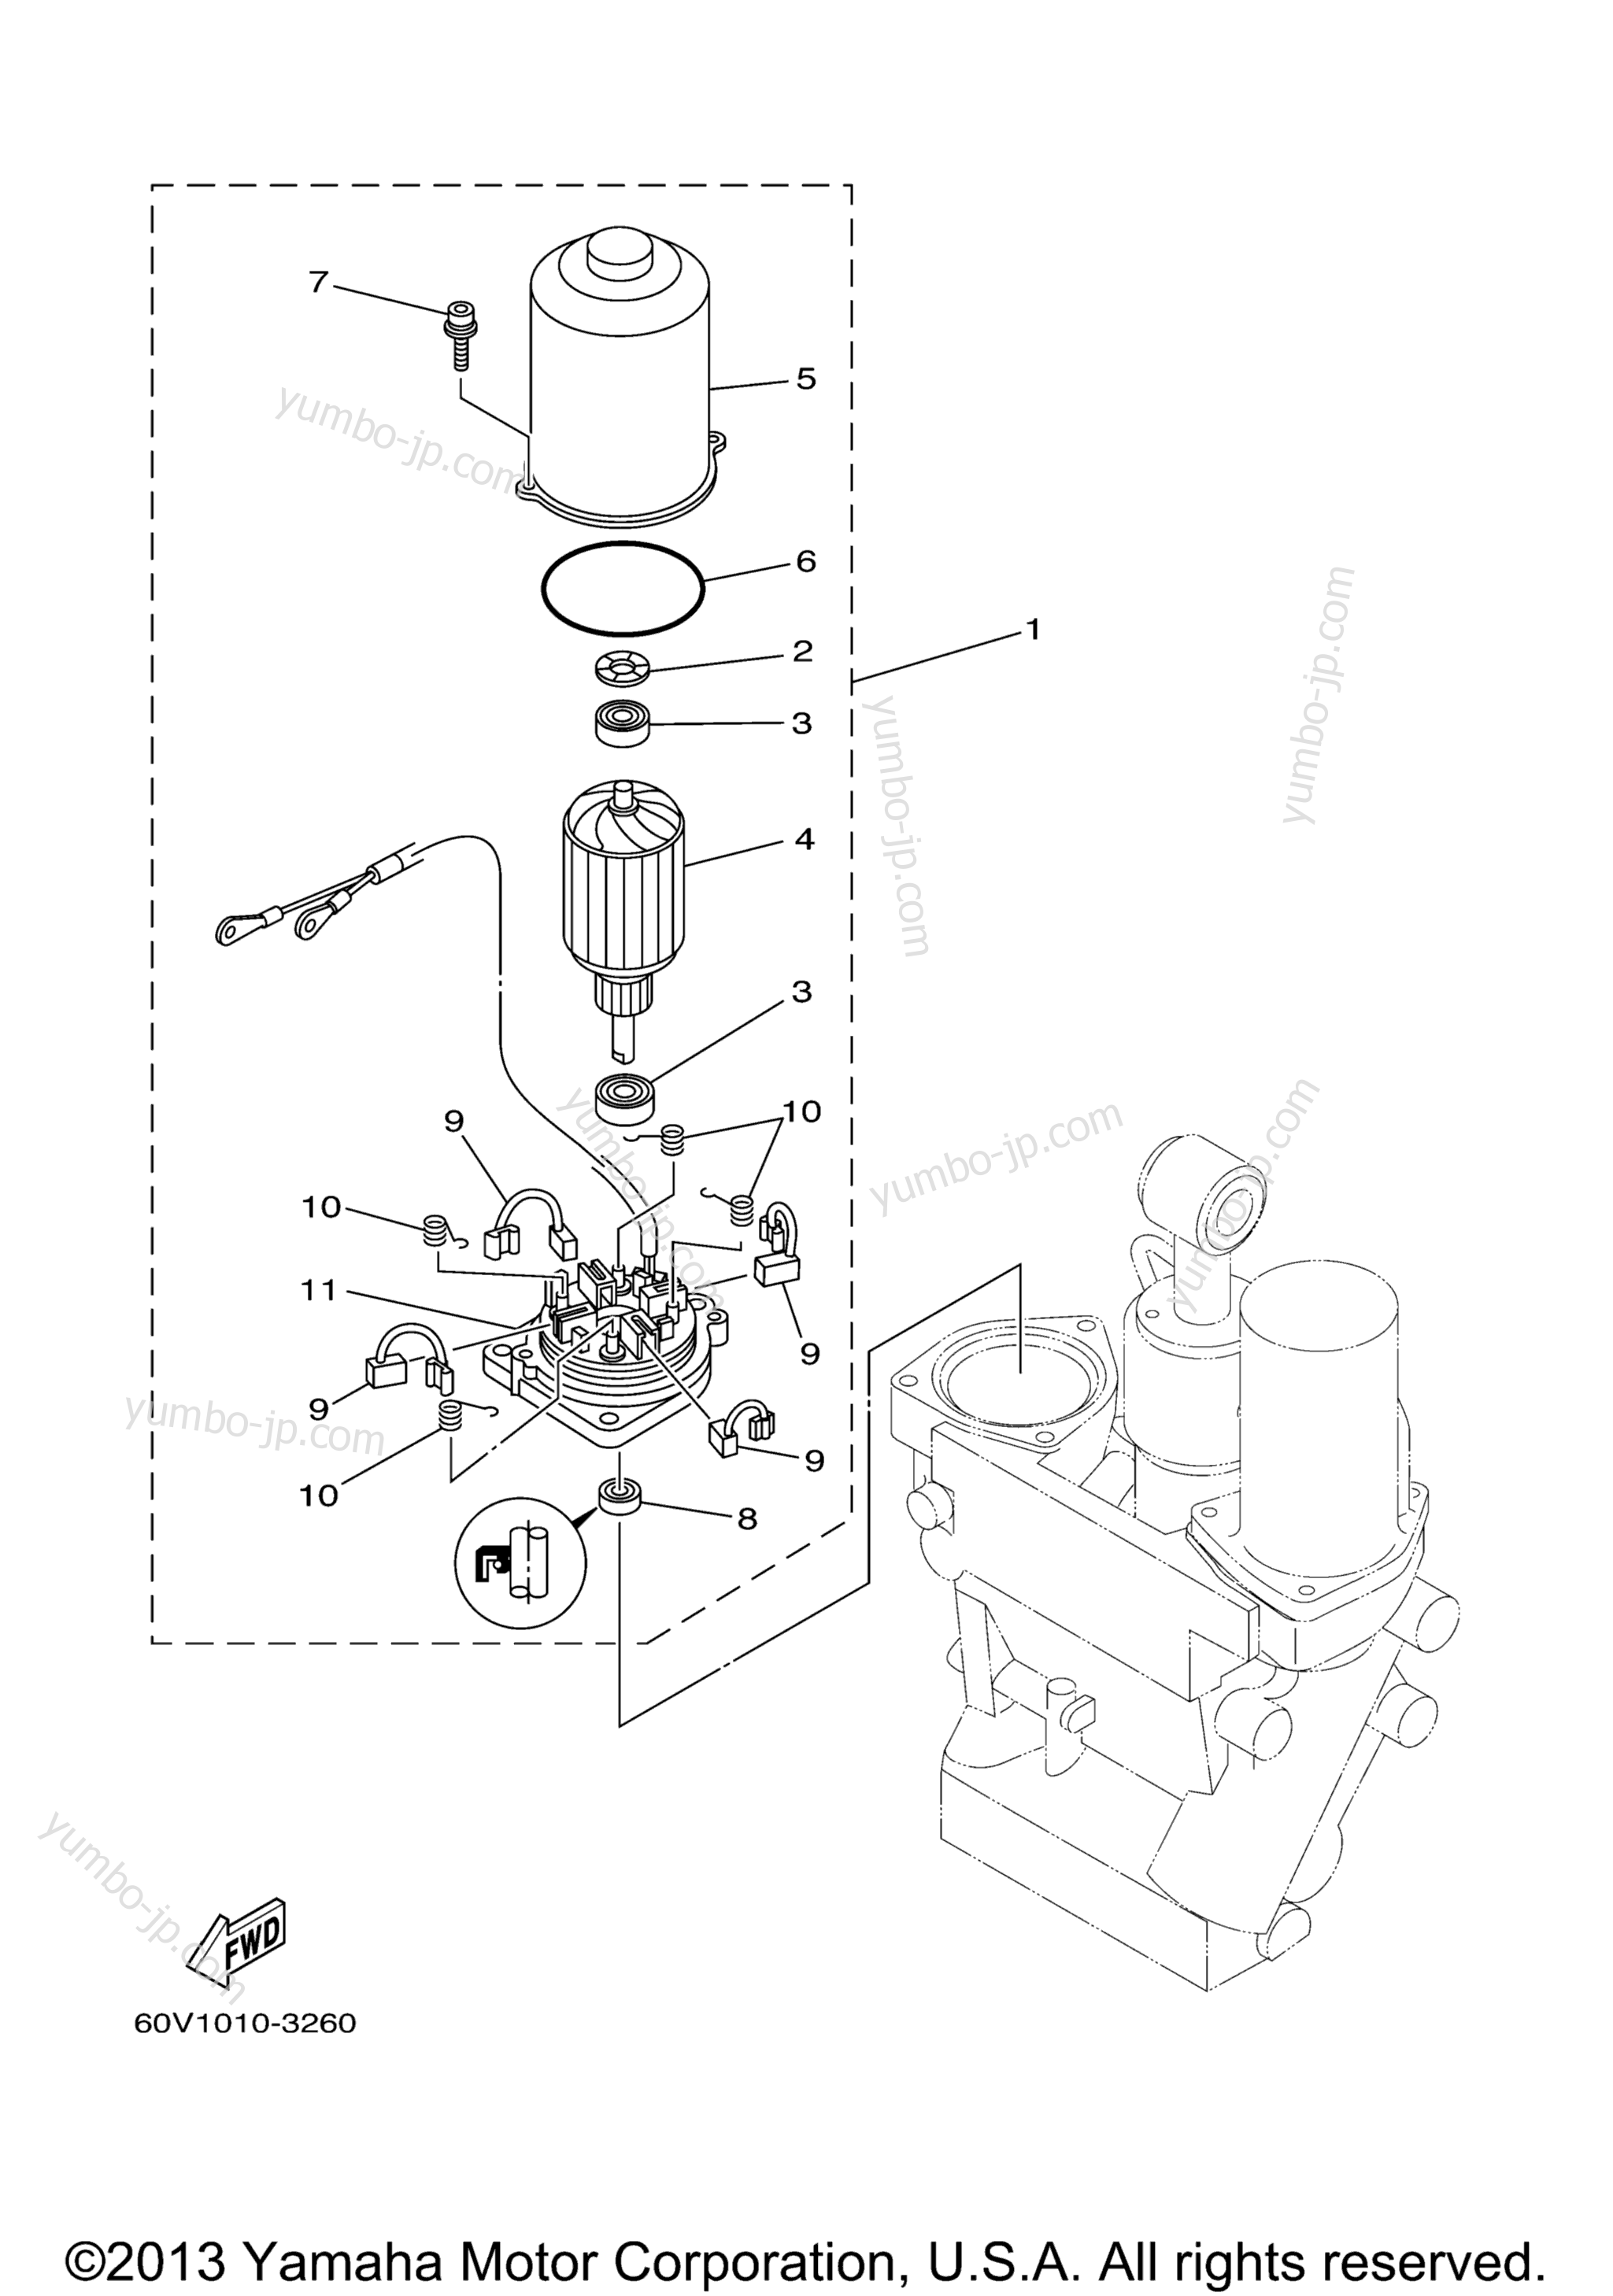 Power Trim & Tilt Assy 2 для лодочных моторов YAMAHA LZ250TXR (0405) 60V-1003974~1004111 LZ250TXR 60W-1001537~1001608 2006 г.